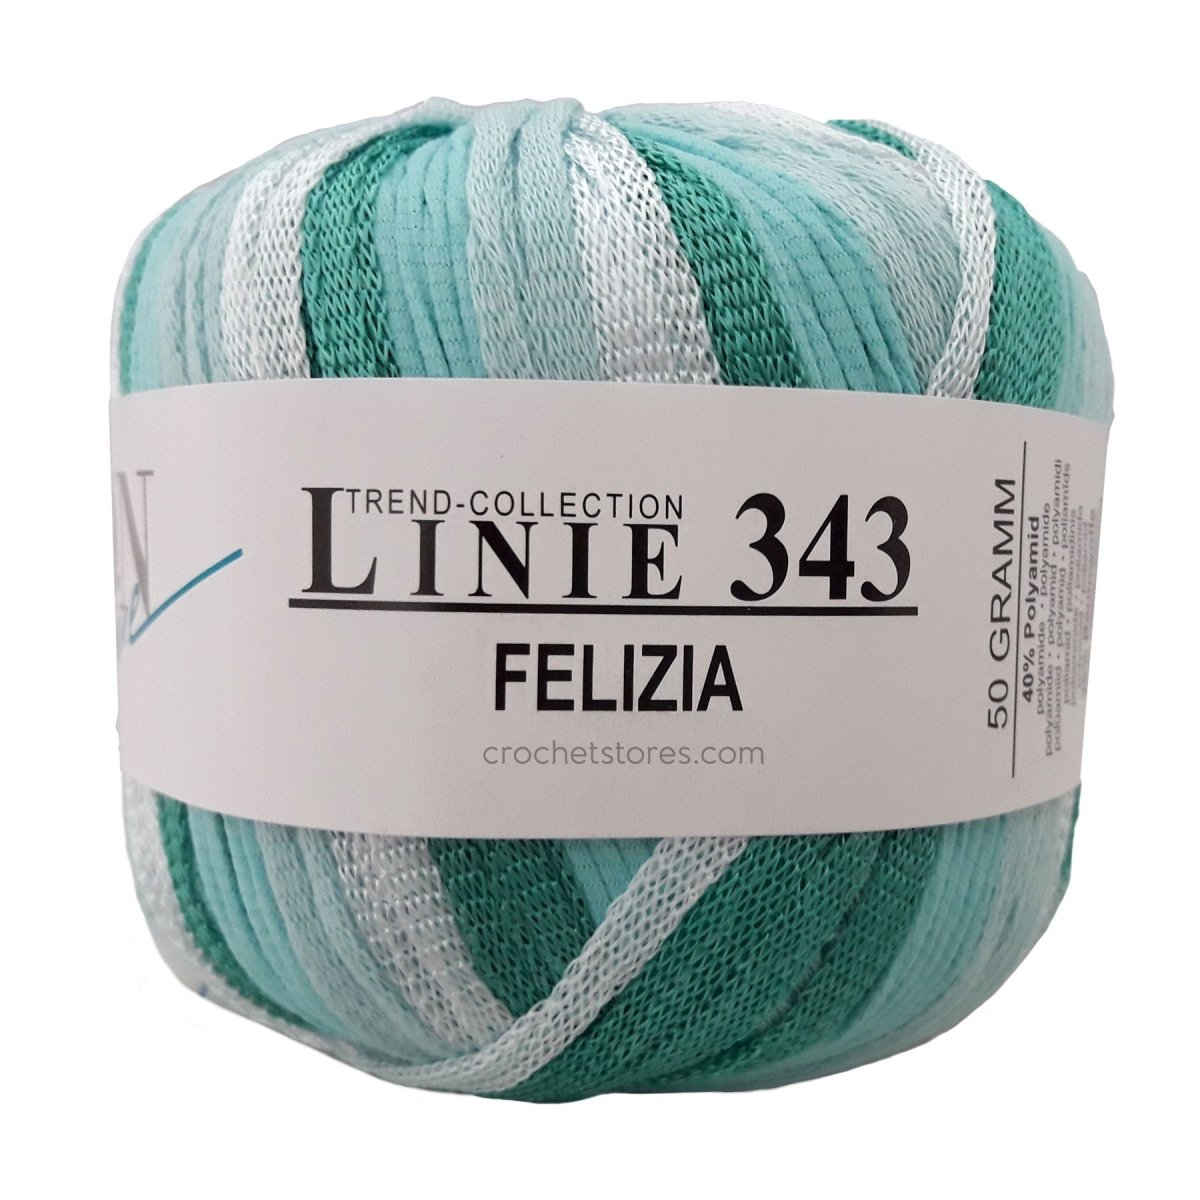 FELIZIA - Crochetstores110343-064014366146773